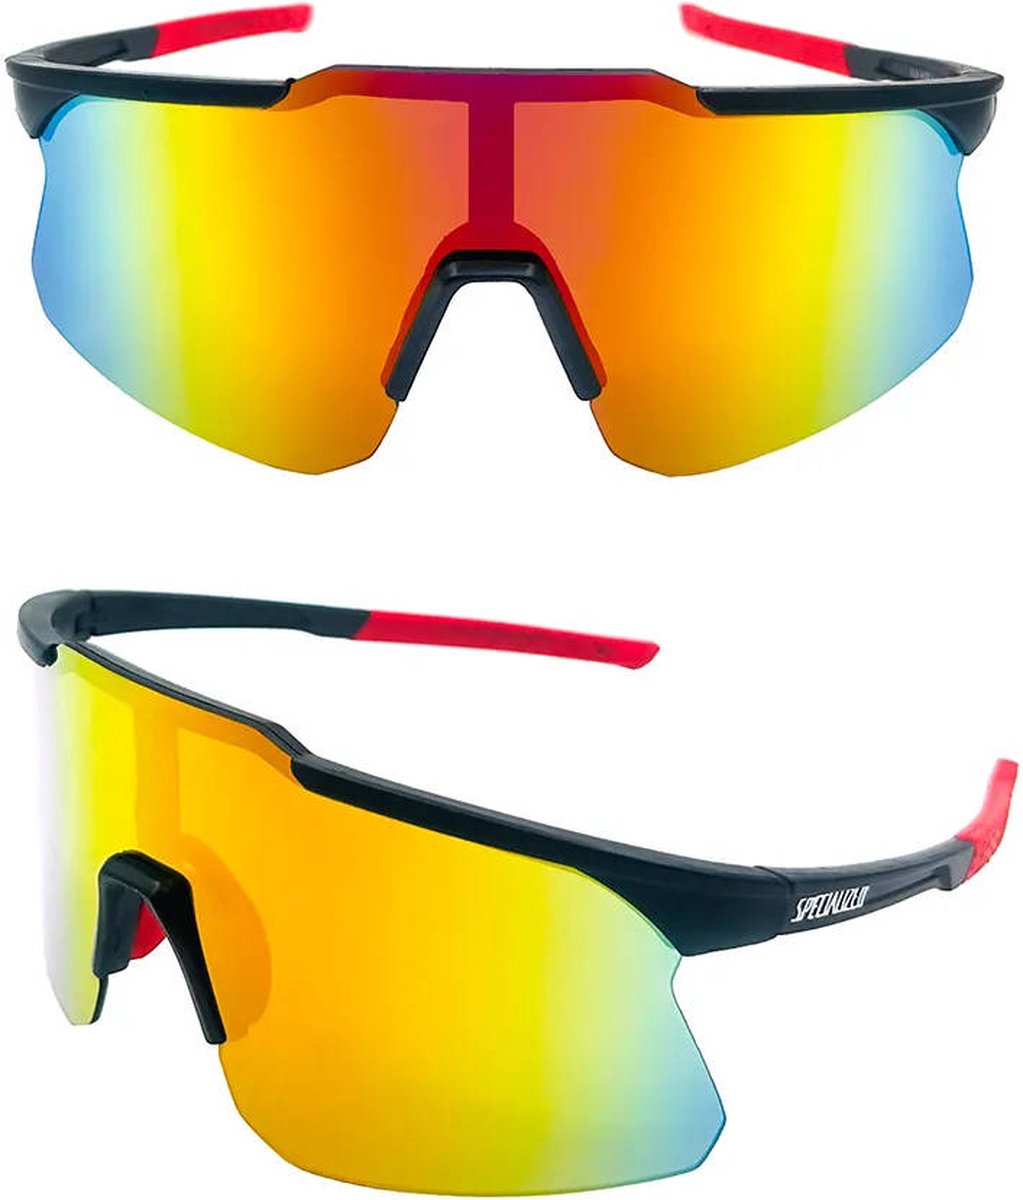 Specialized Fietsbril - Racefiets - Sportbril - Mountainbike - Unisex - UV-bescherming - 155mm - Zwart Rood